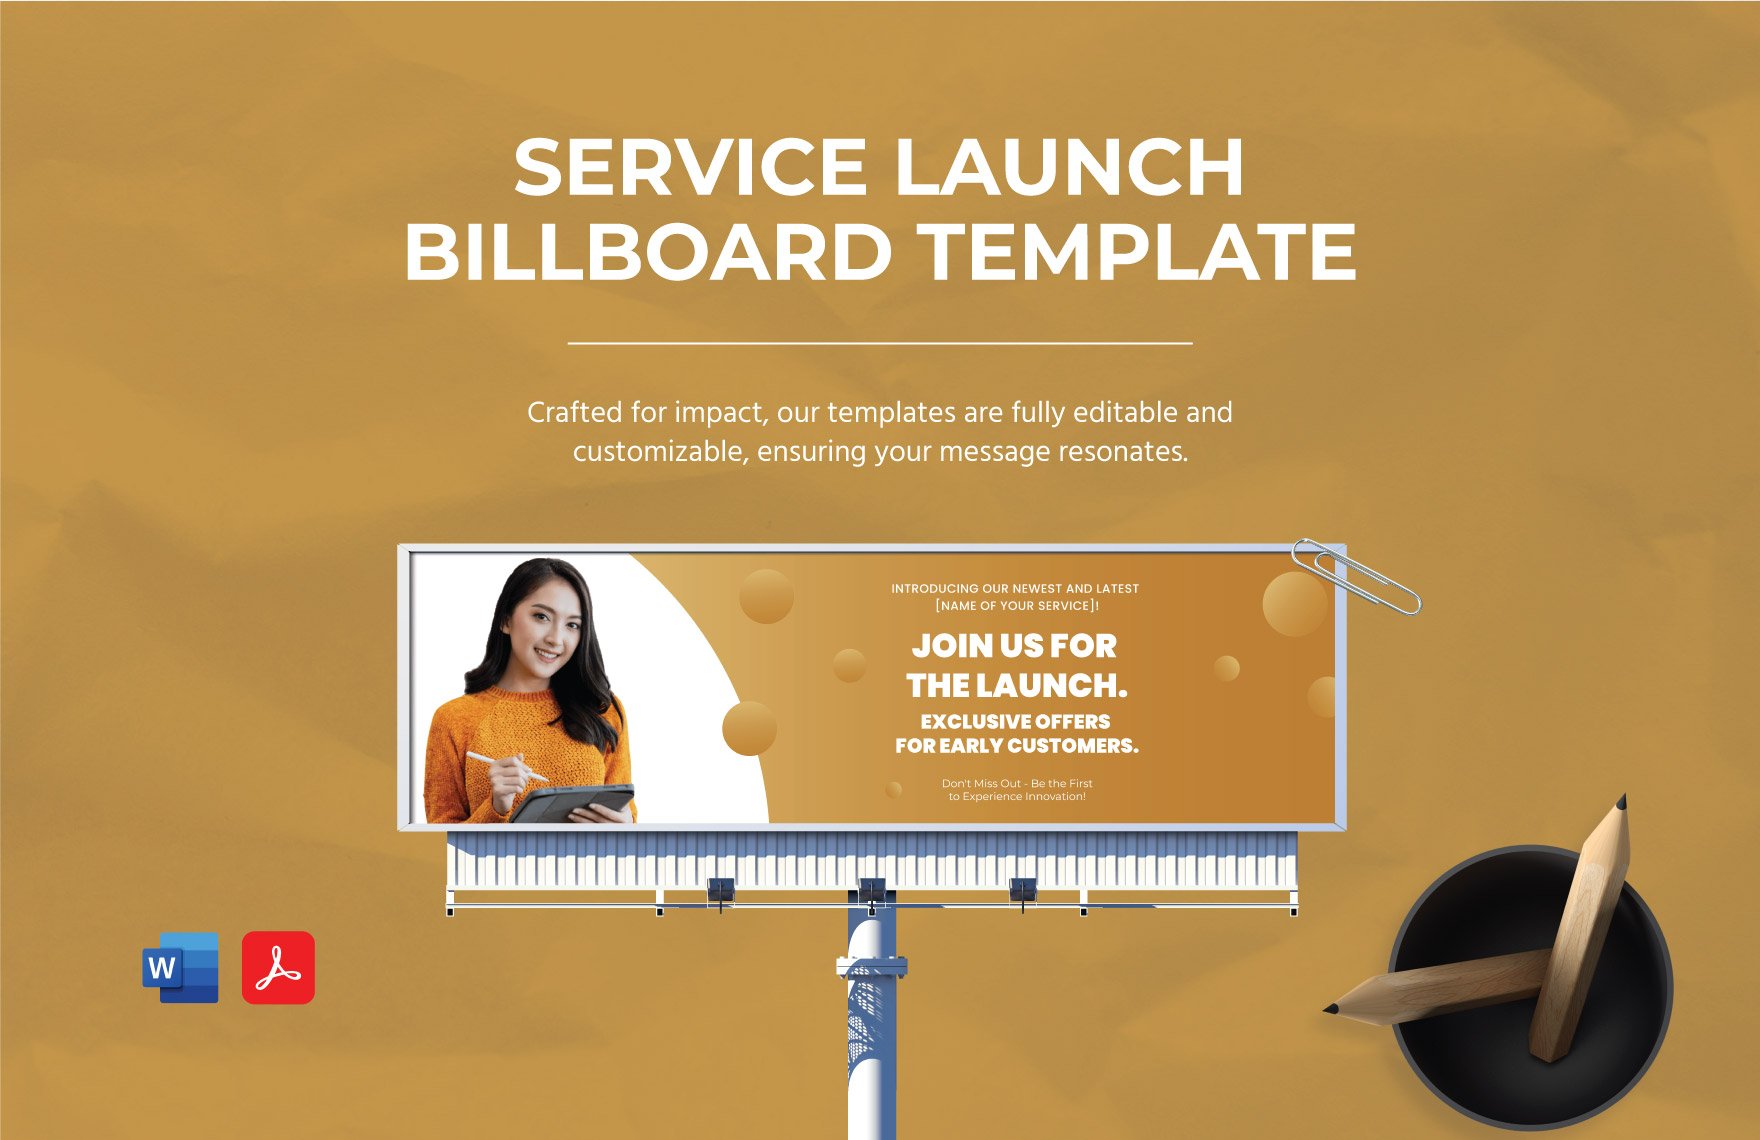 Service Launch Billboard Template